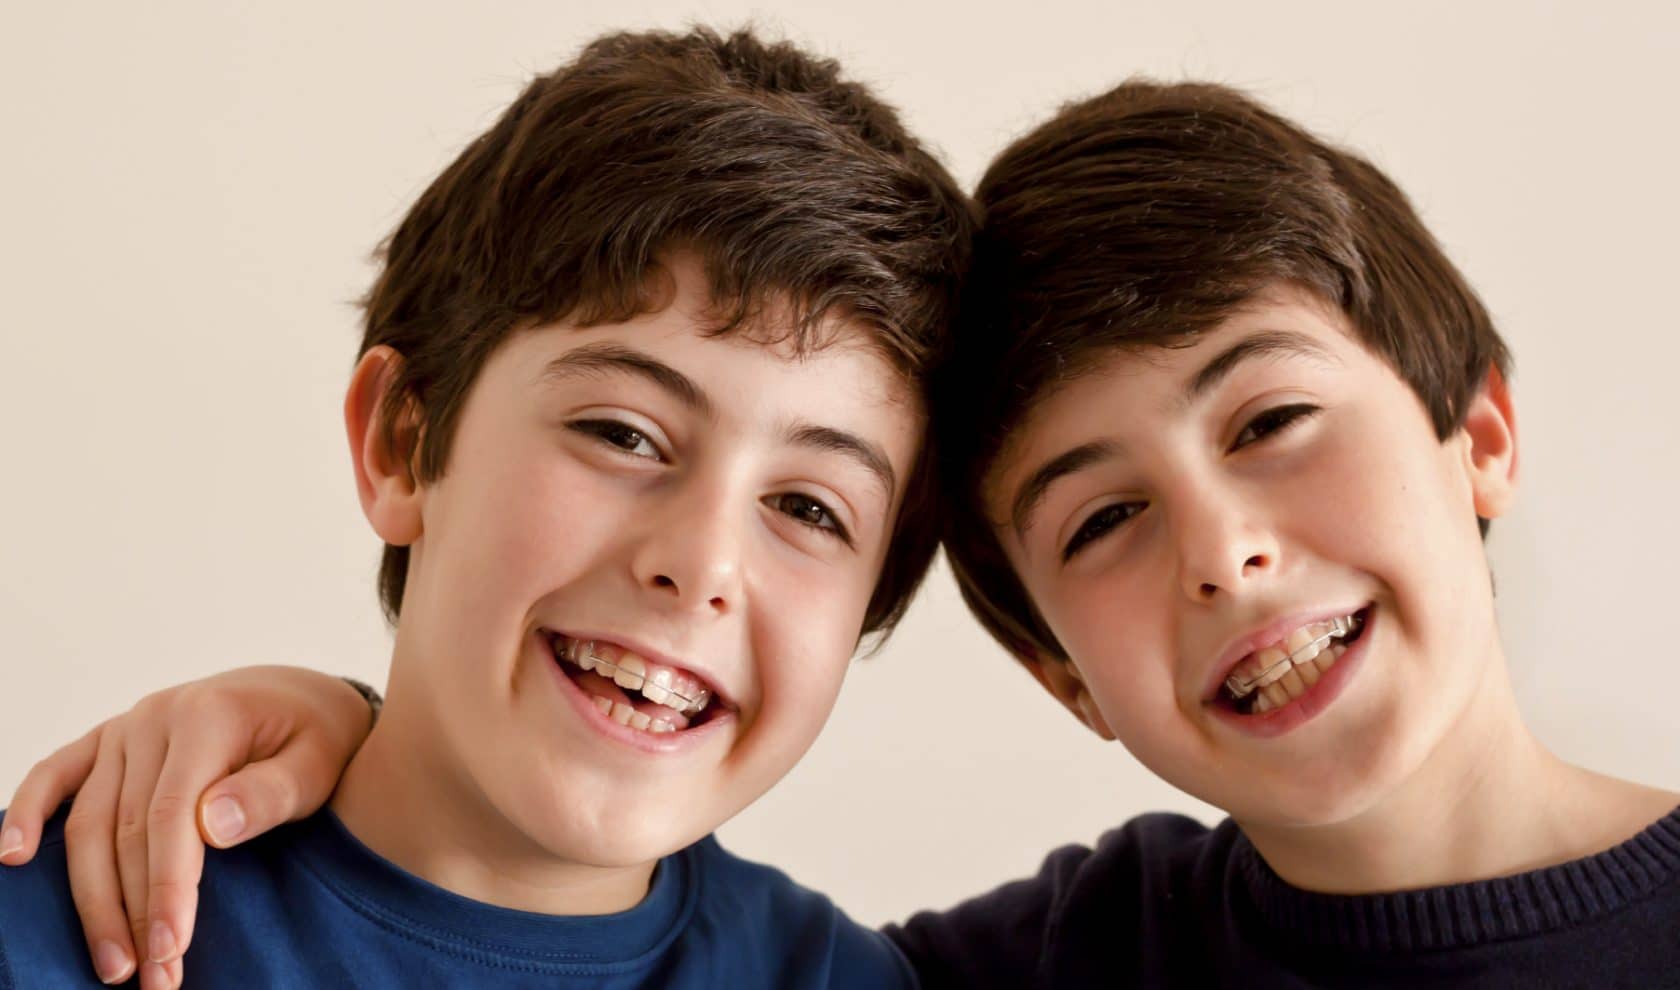 Photo of twins wearing braces